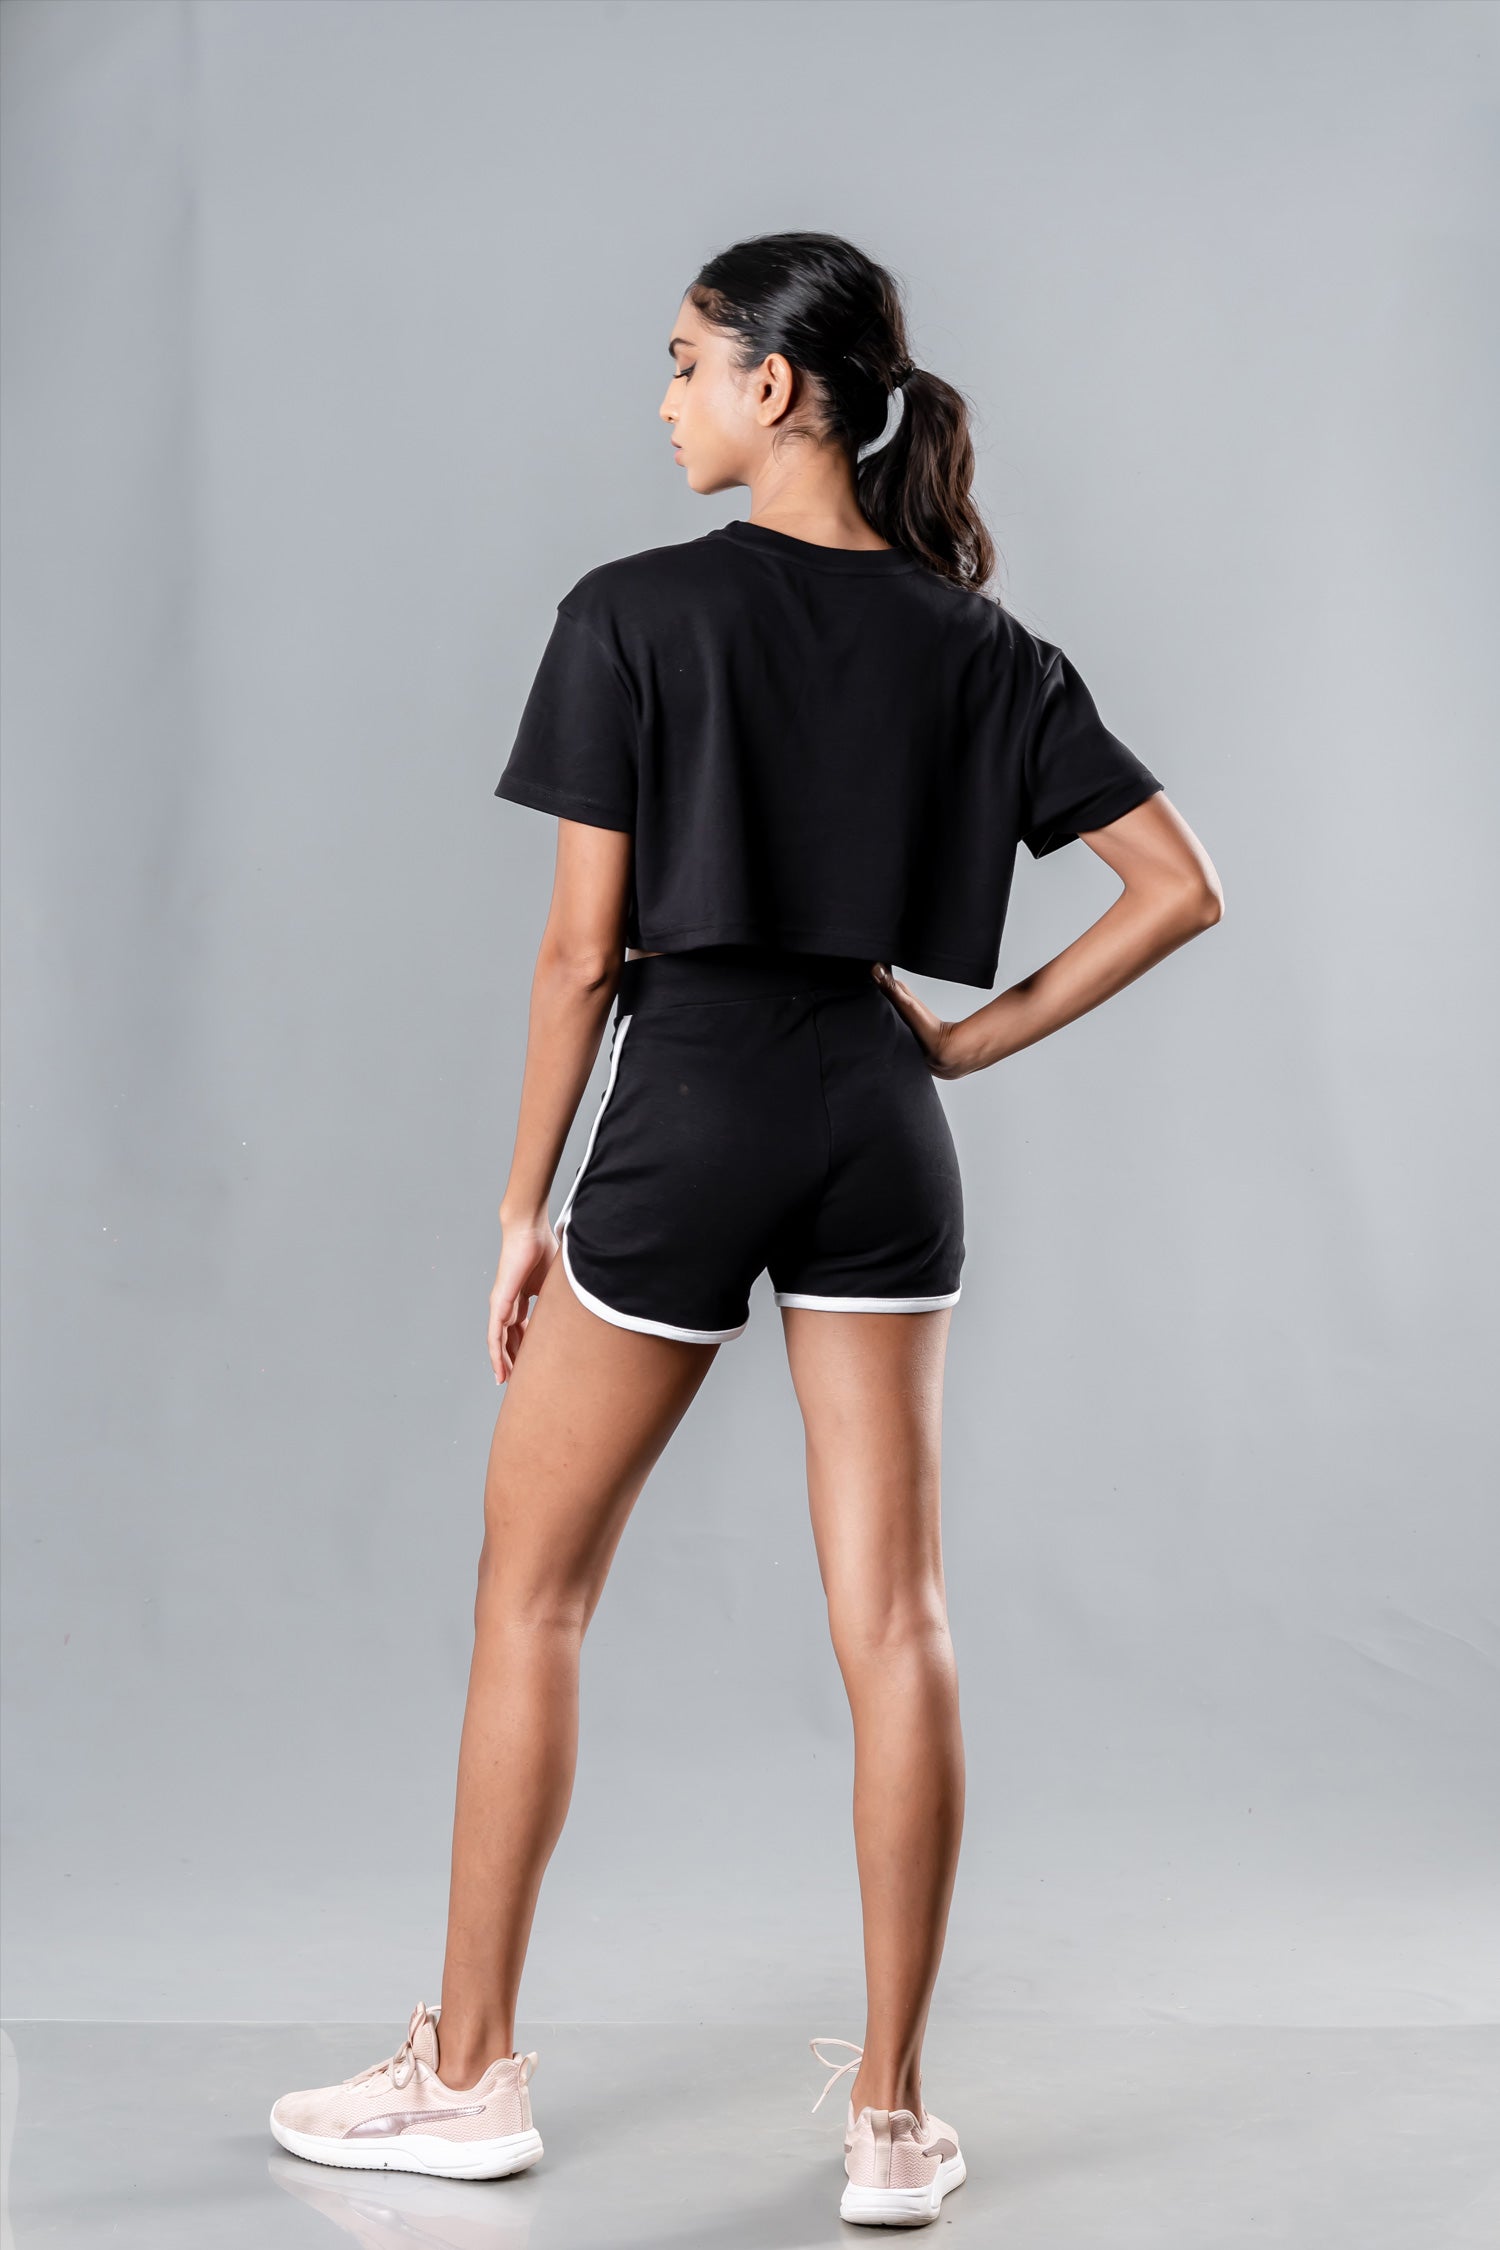 Black Crop Top T-Shirt | Societies Clothing Sri Lanka | Activewear | Gym Clothes | Gym Wear | Gym Comfort Wear 